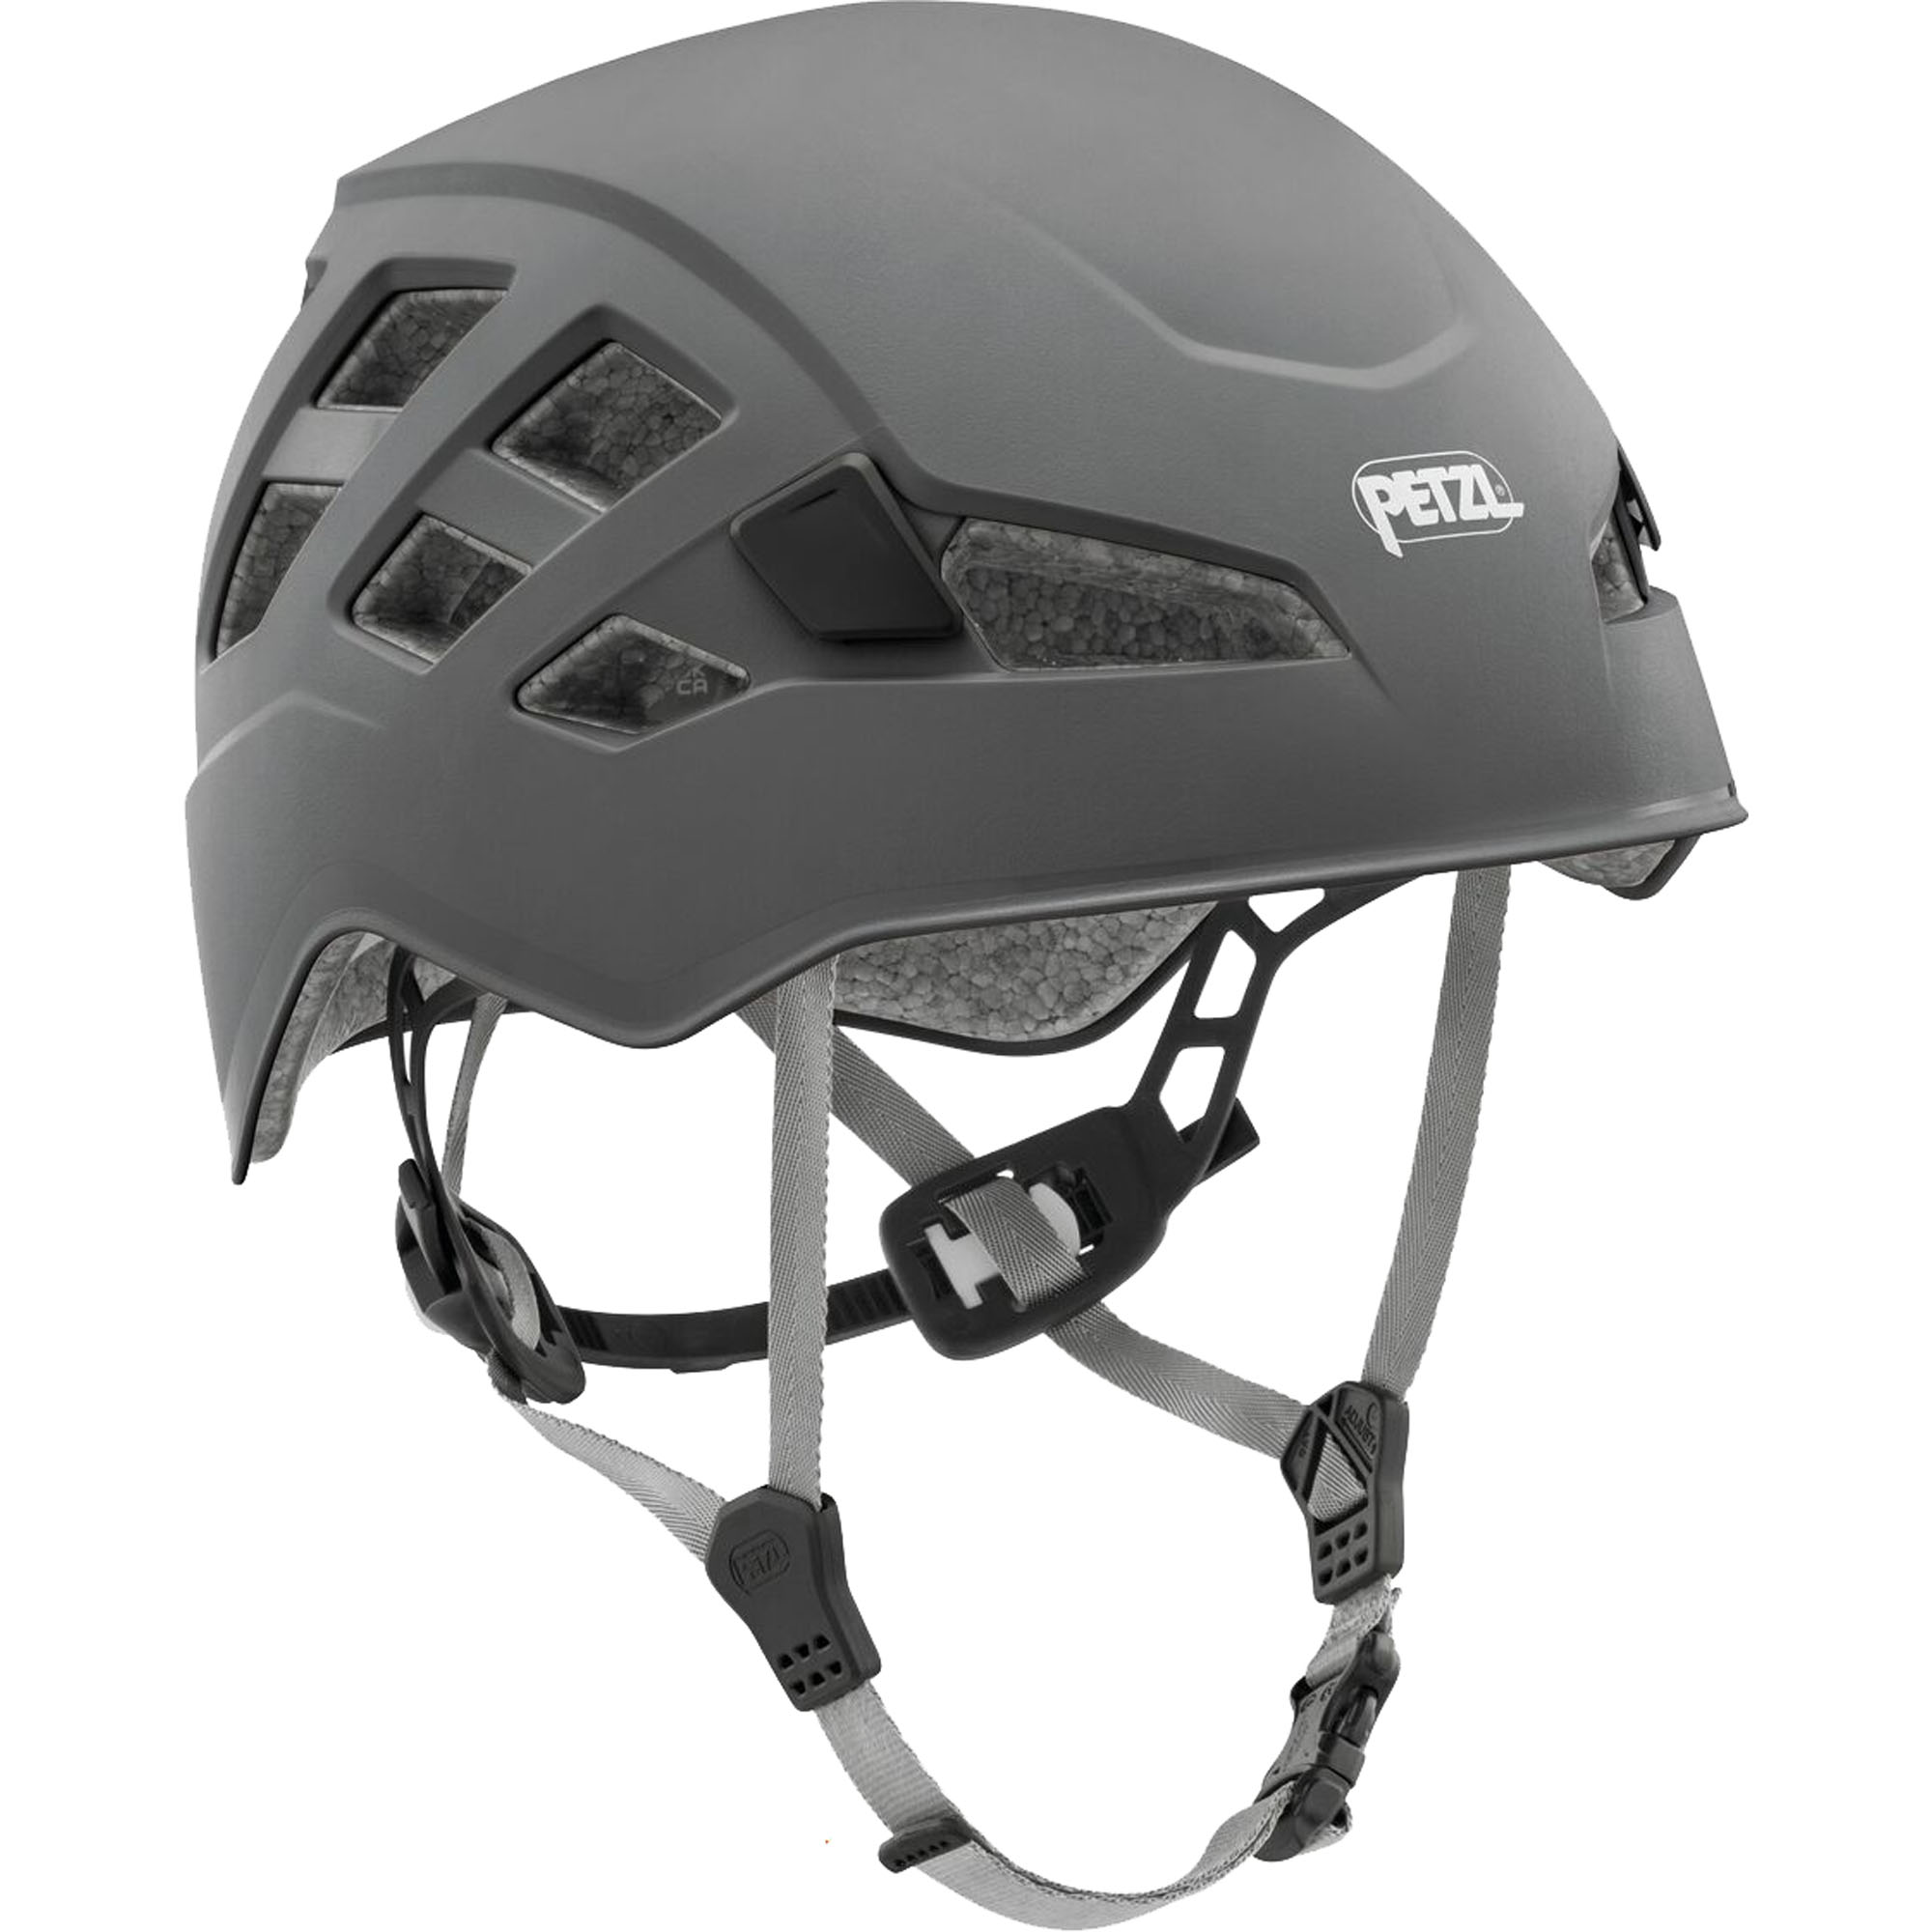 Photos - Protective Gear Set Petzl Boreo Via Ferrata/Rock Climbing Helmet, S/M Grey A042VA02 